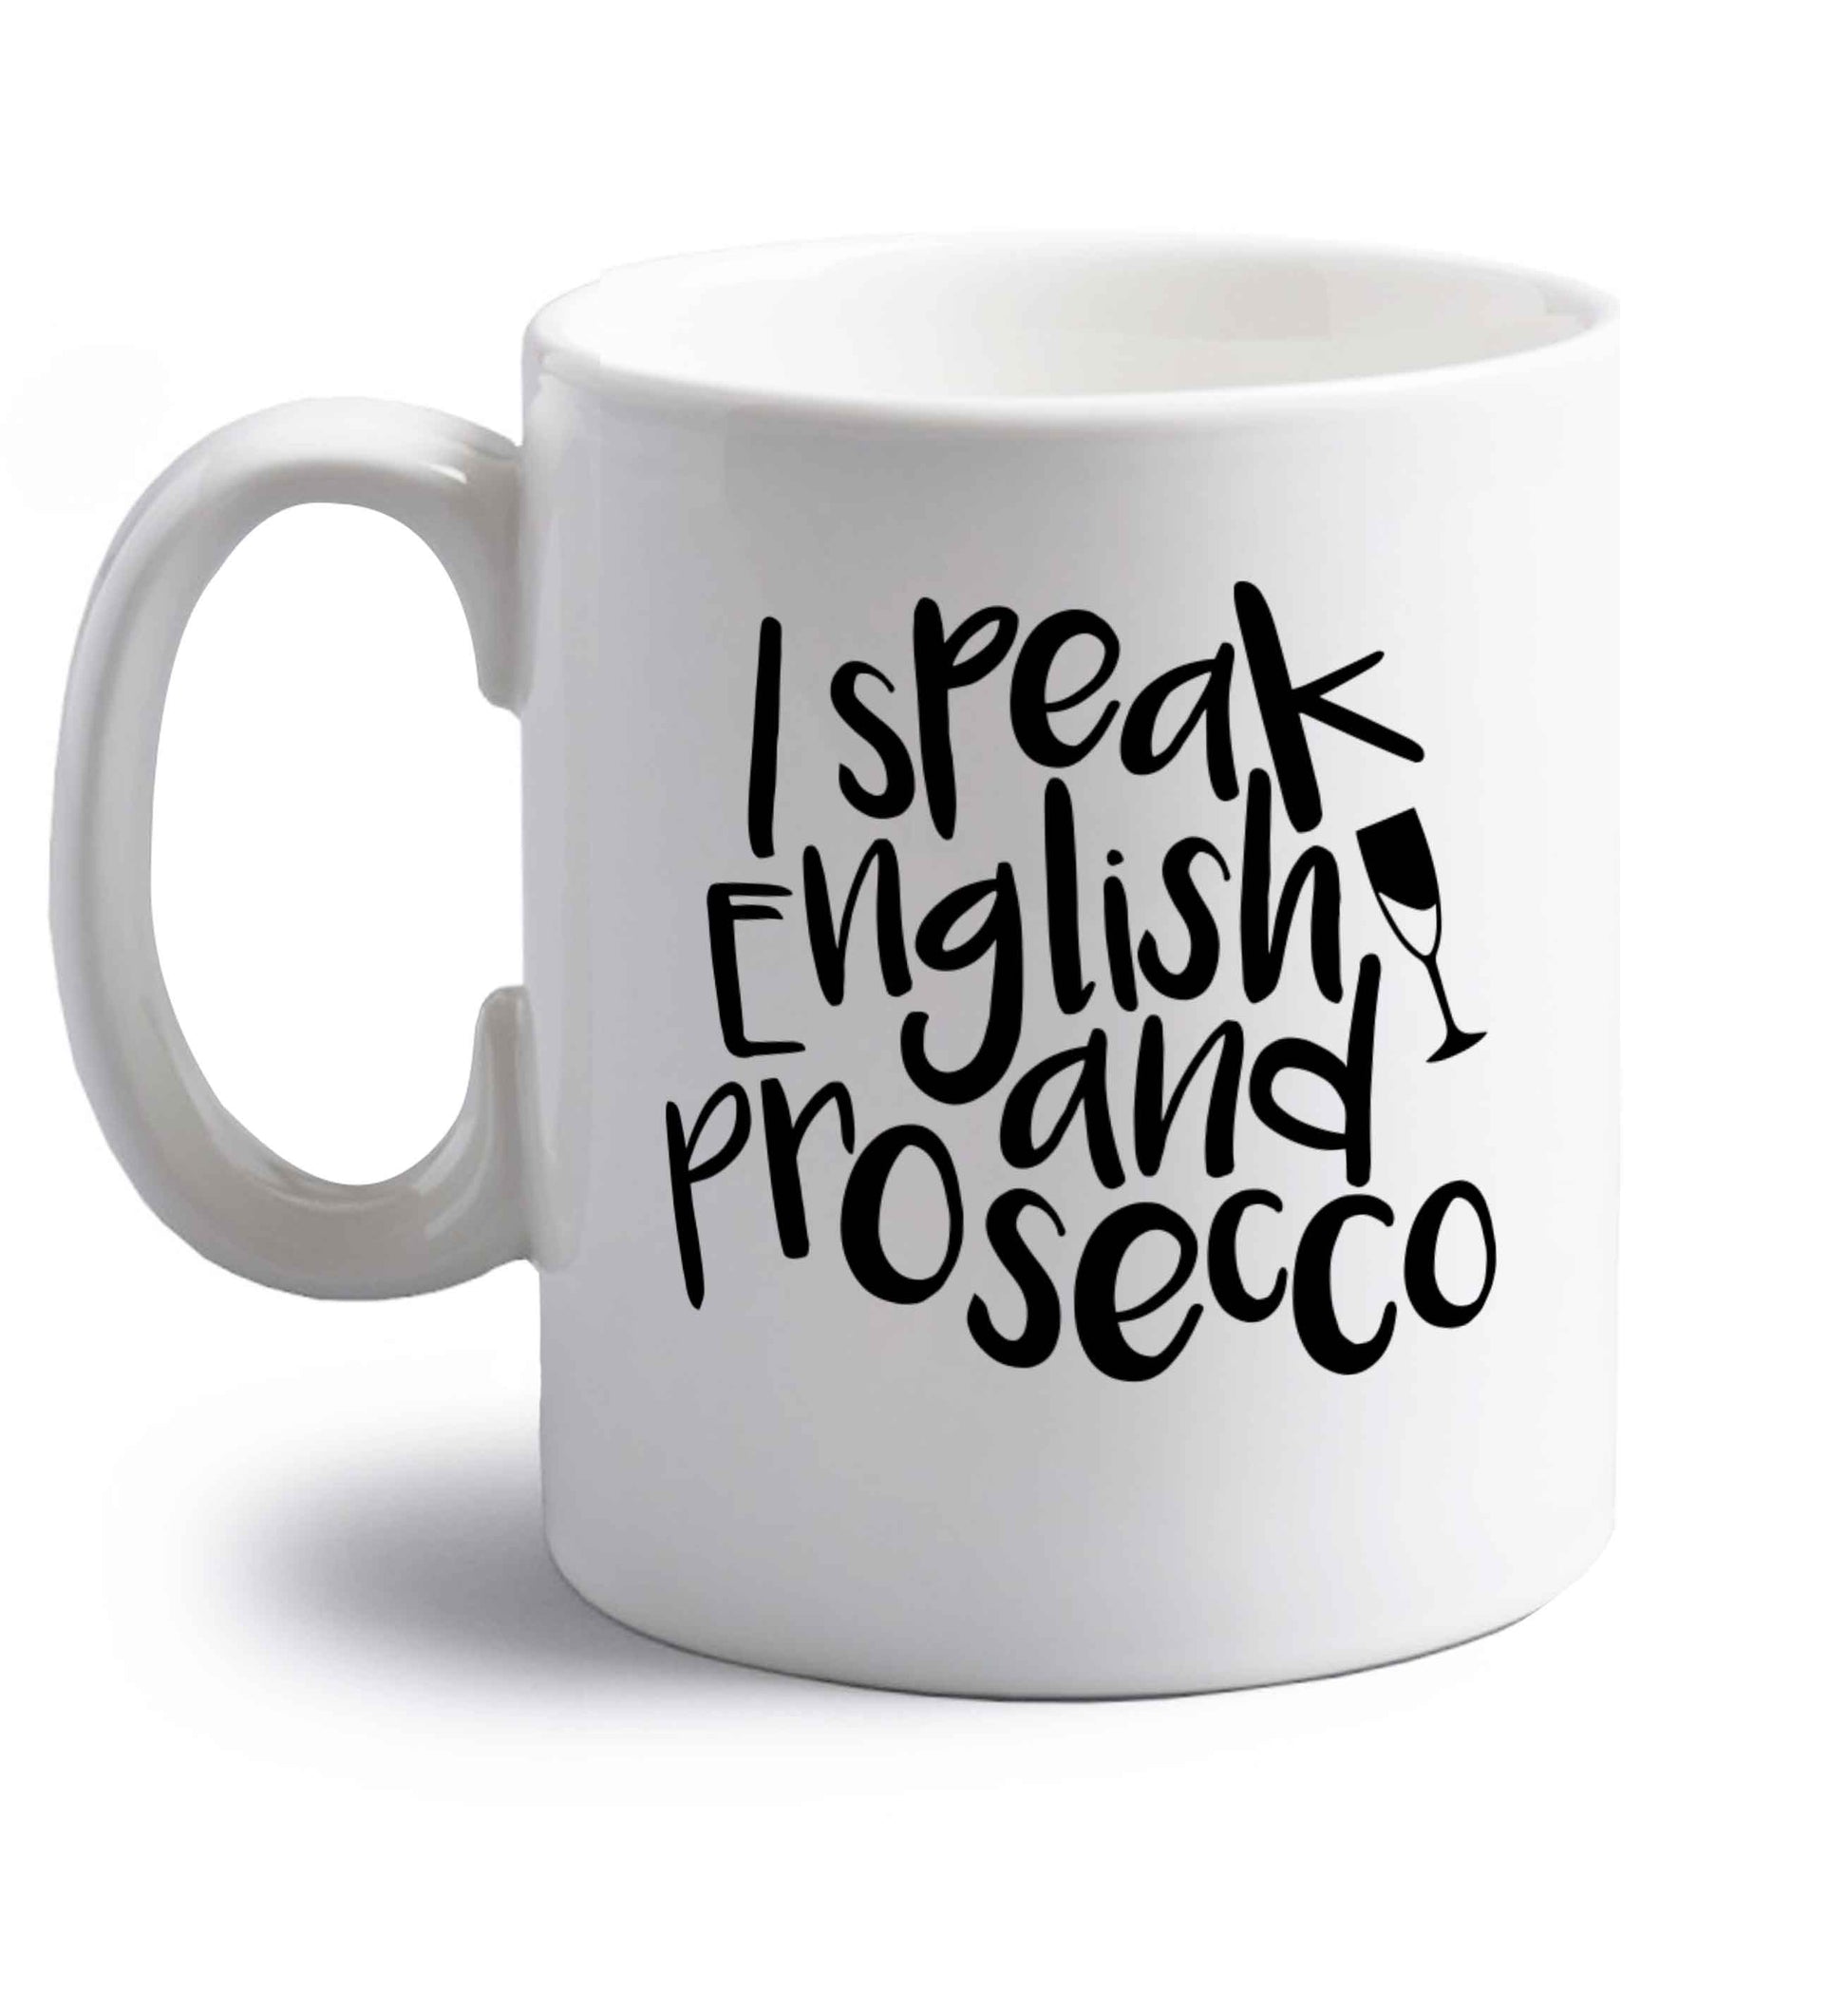 I speak English and prosecco right handed white ceramic mug 